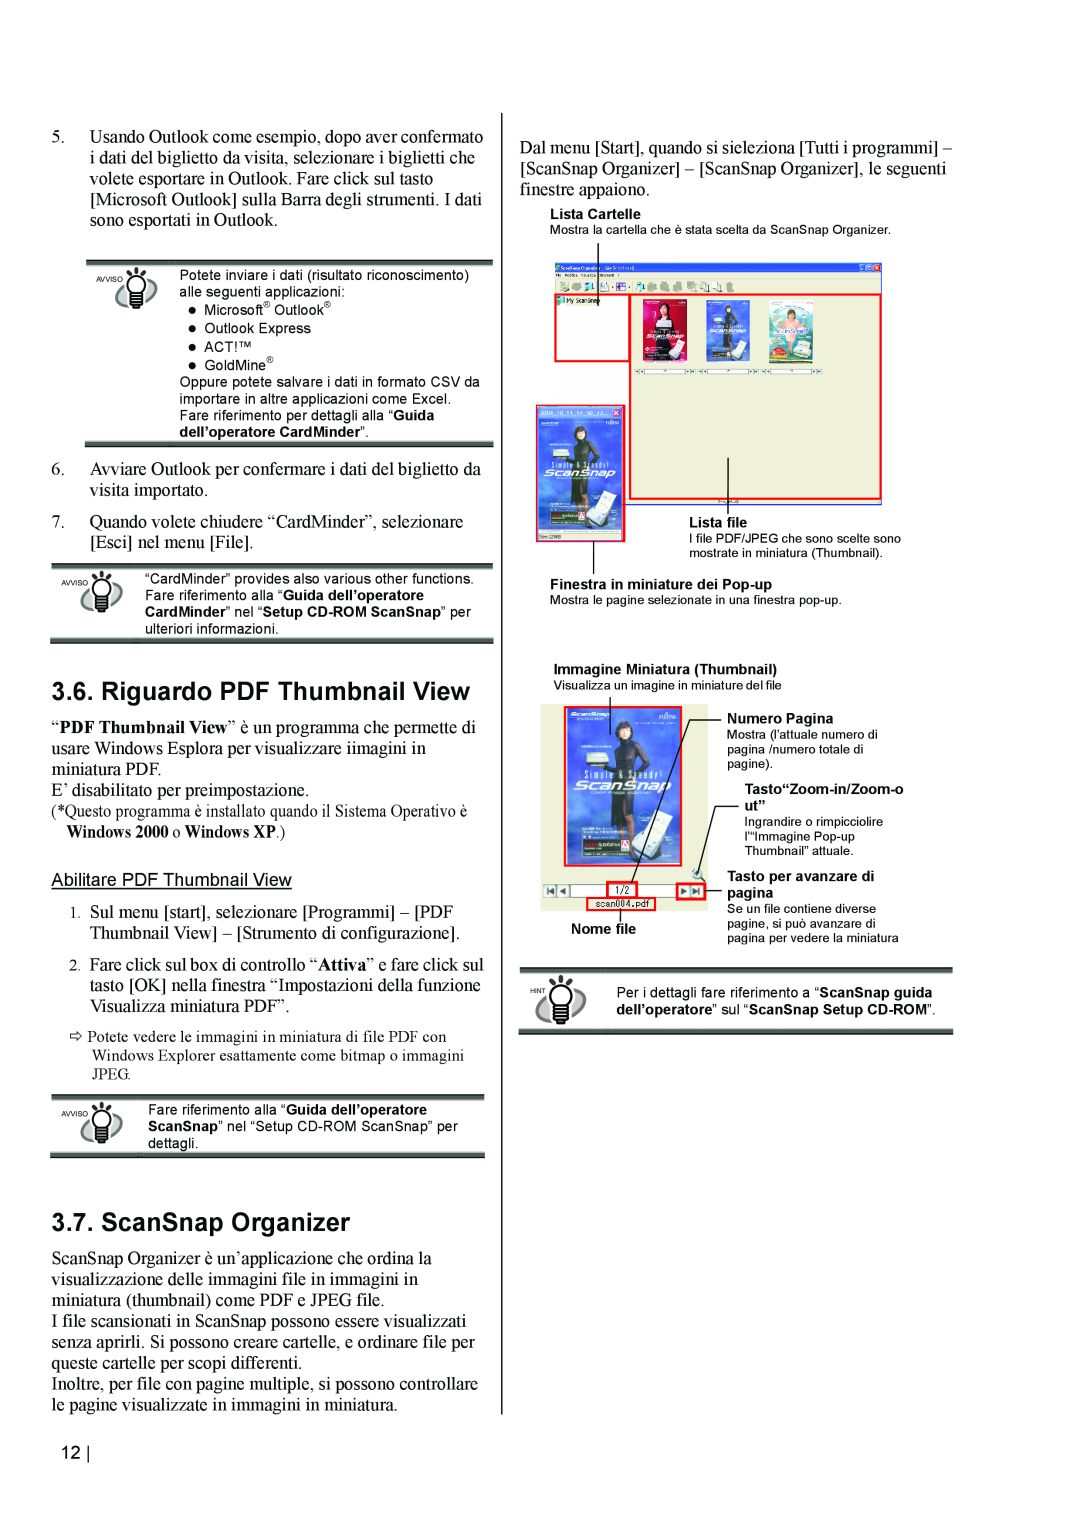 Fujitsu fi-5110EOX2 manual Abilitare PDF Thumbnail View, ScanSnap Organizer 